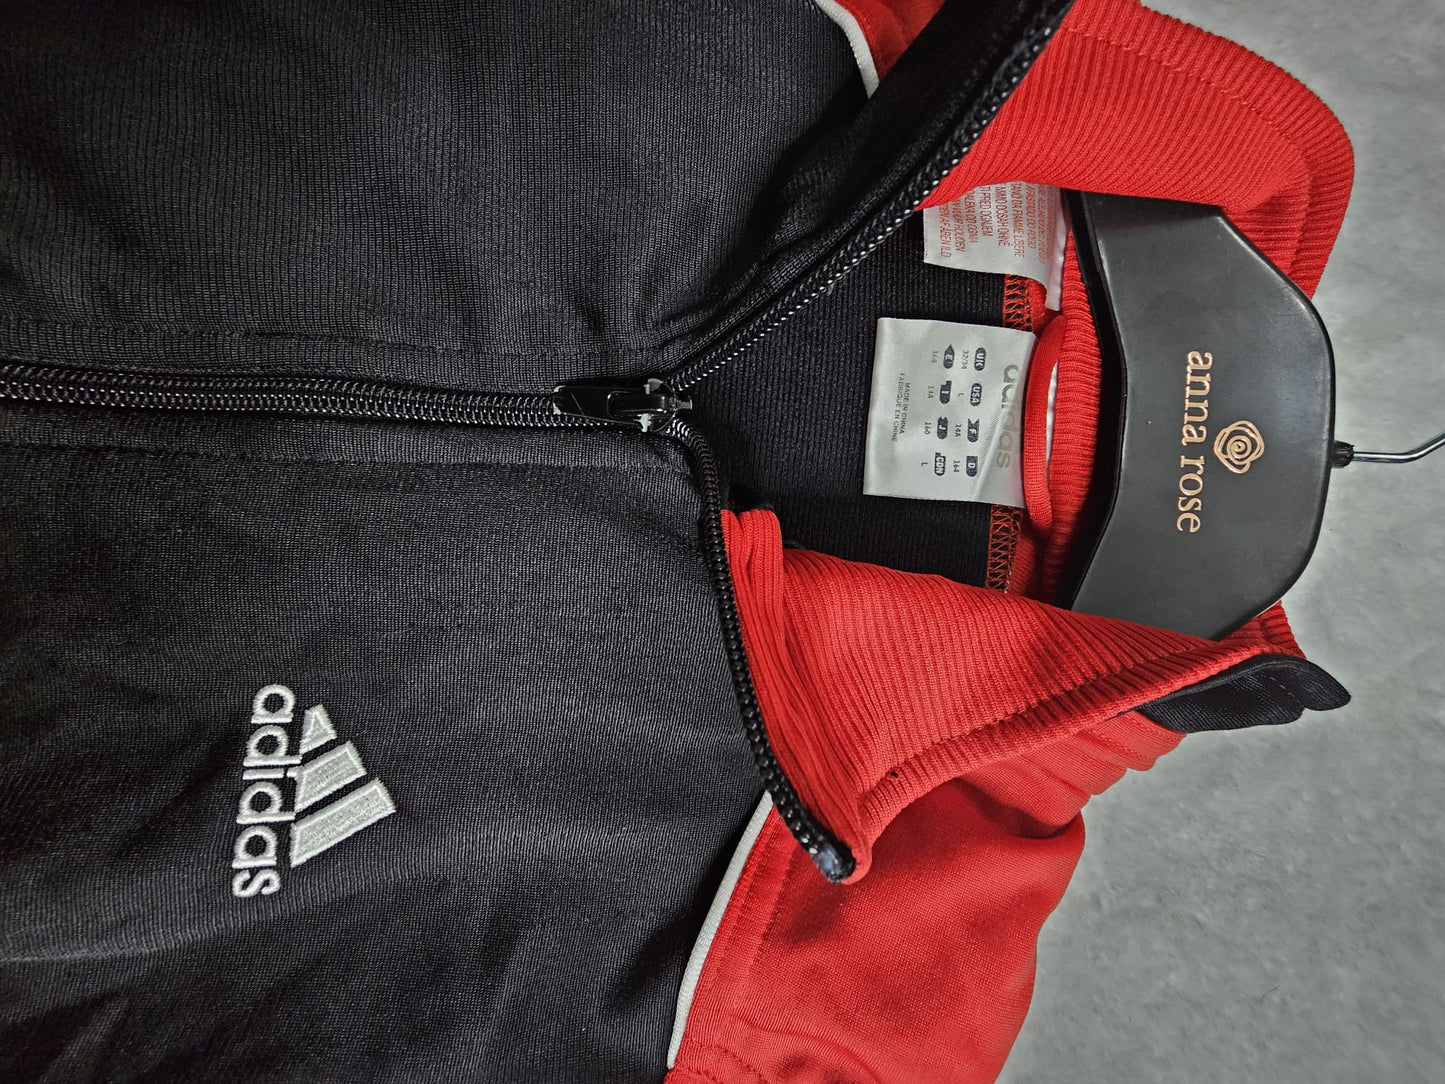 Adidas predator style track zip up top